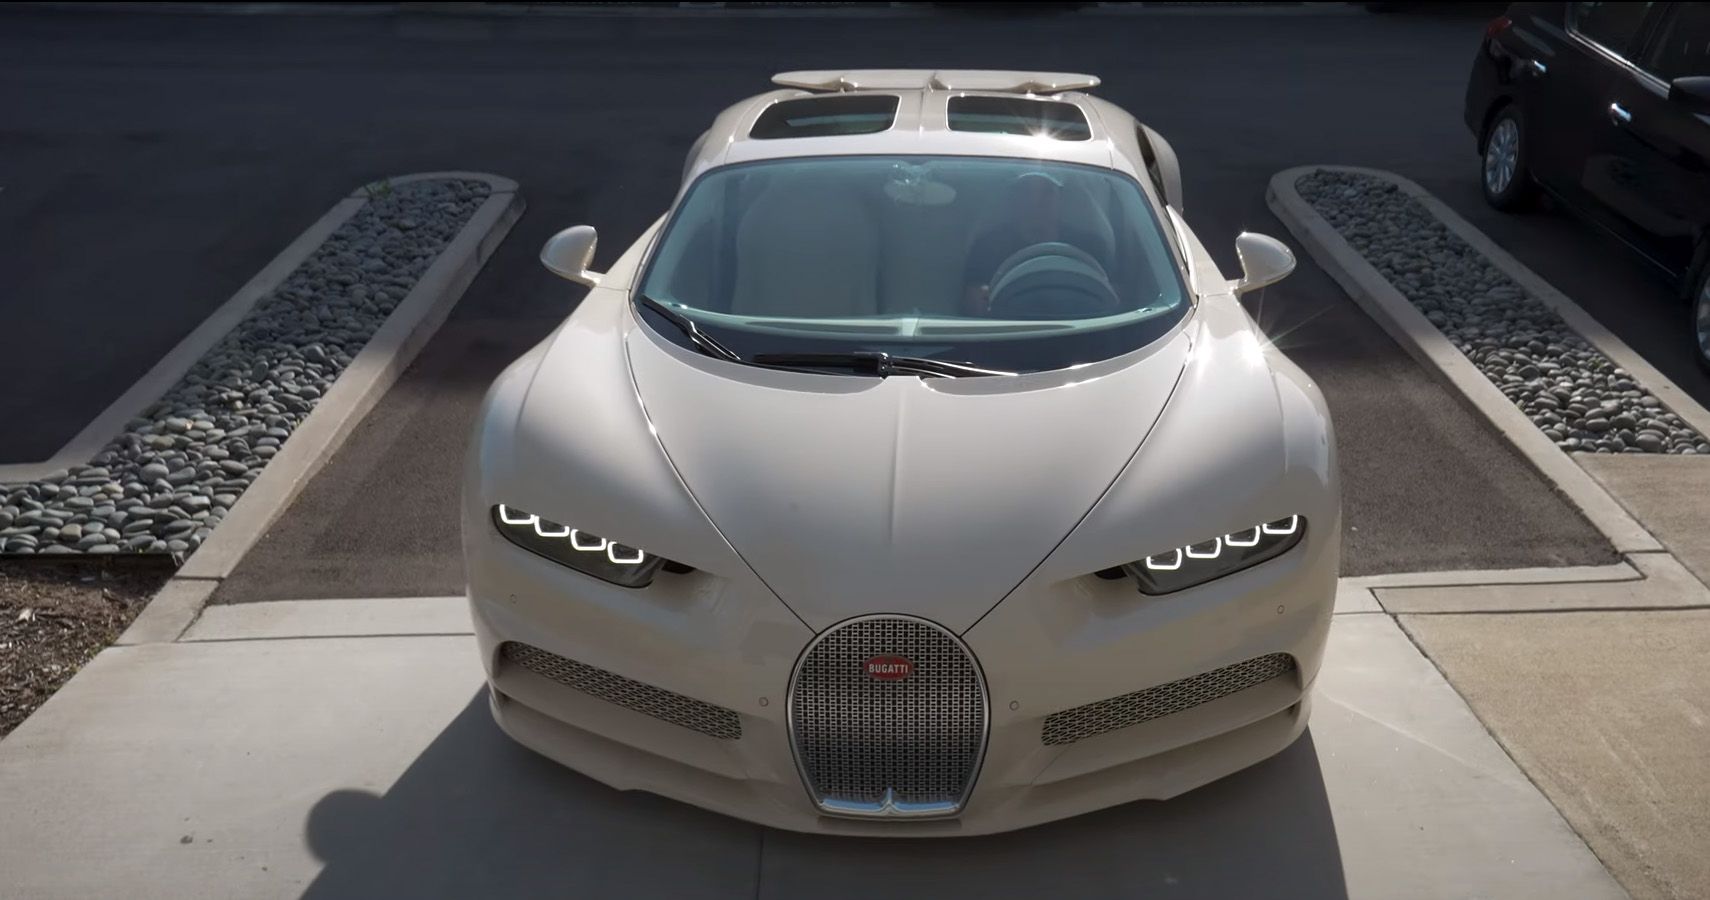 White 2020 Hermes edition Bugatti Chron in parking lot